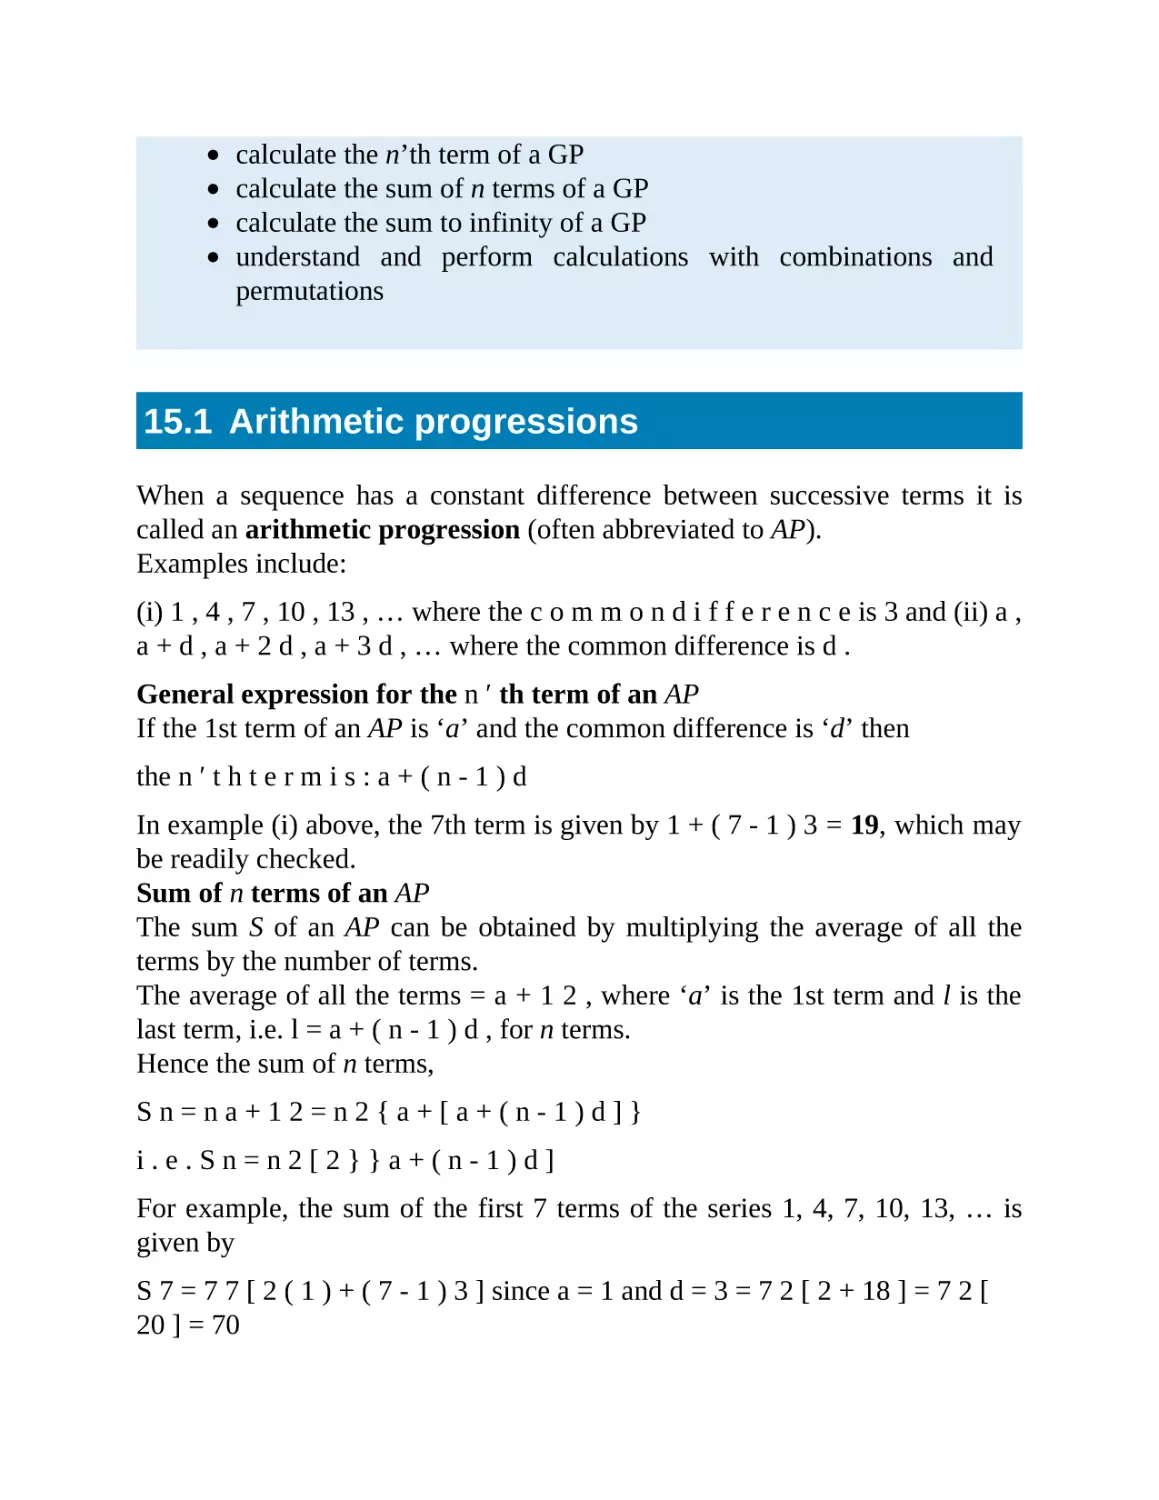 15.1 Arithmetic progressions